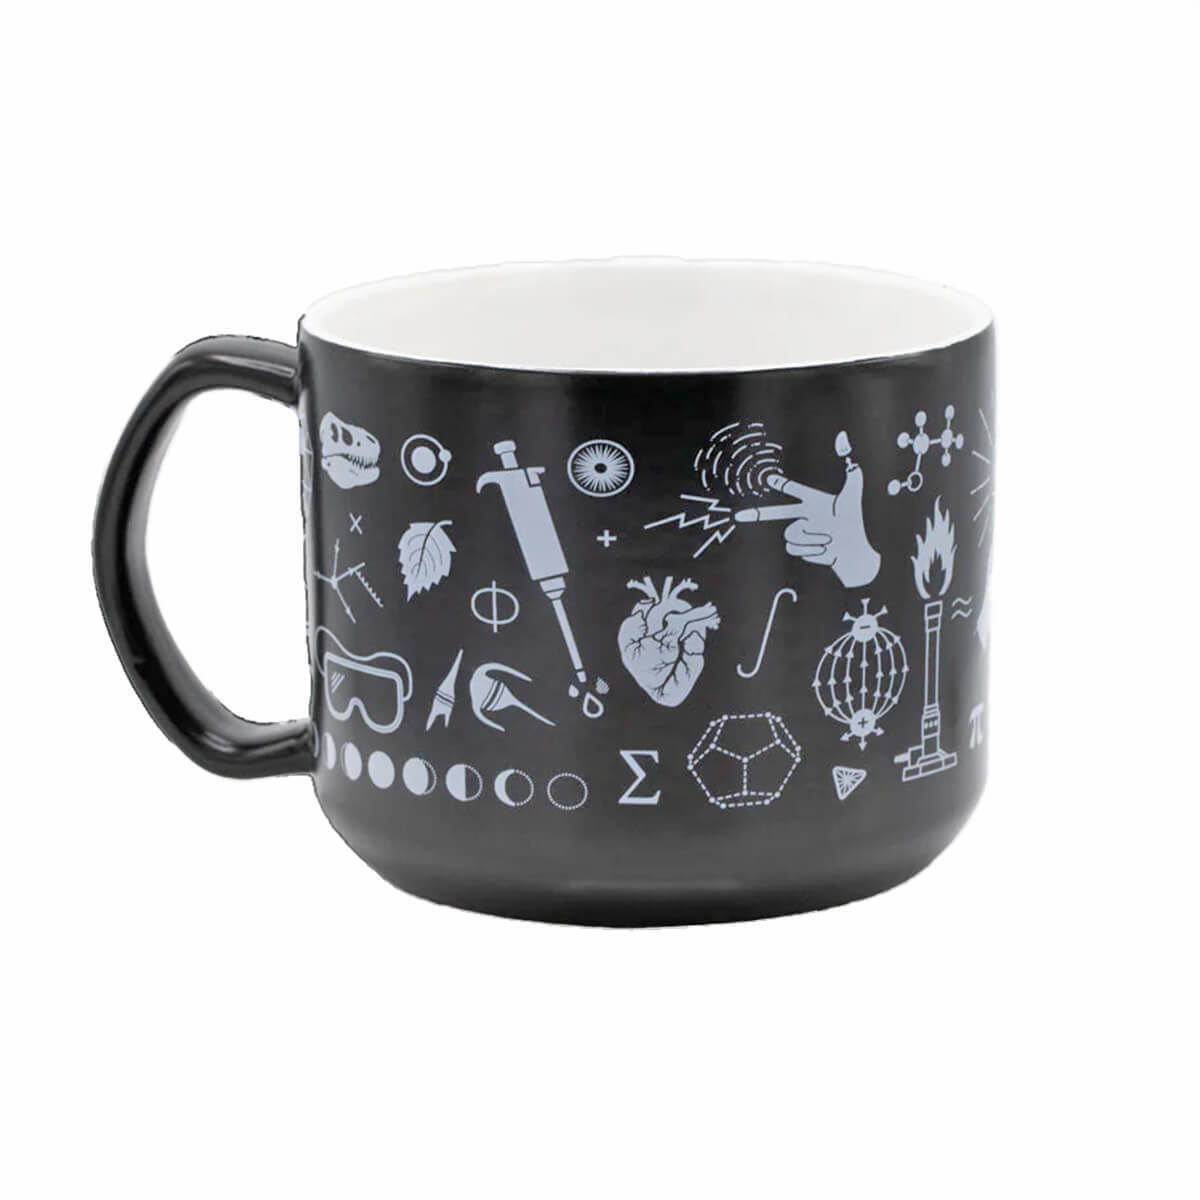 Science is Magic that Works Ceramic Mug additional image